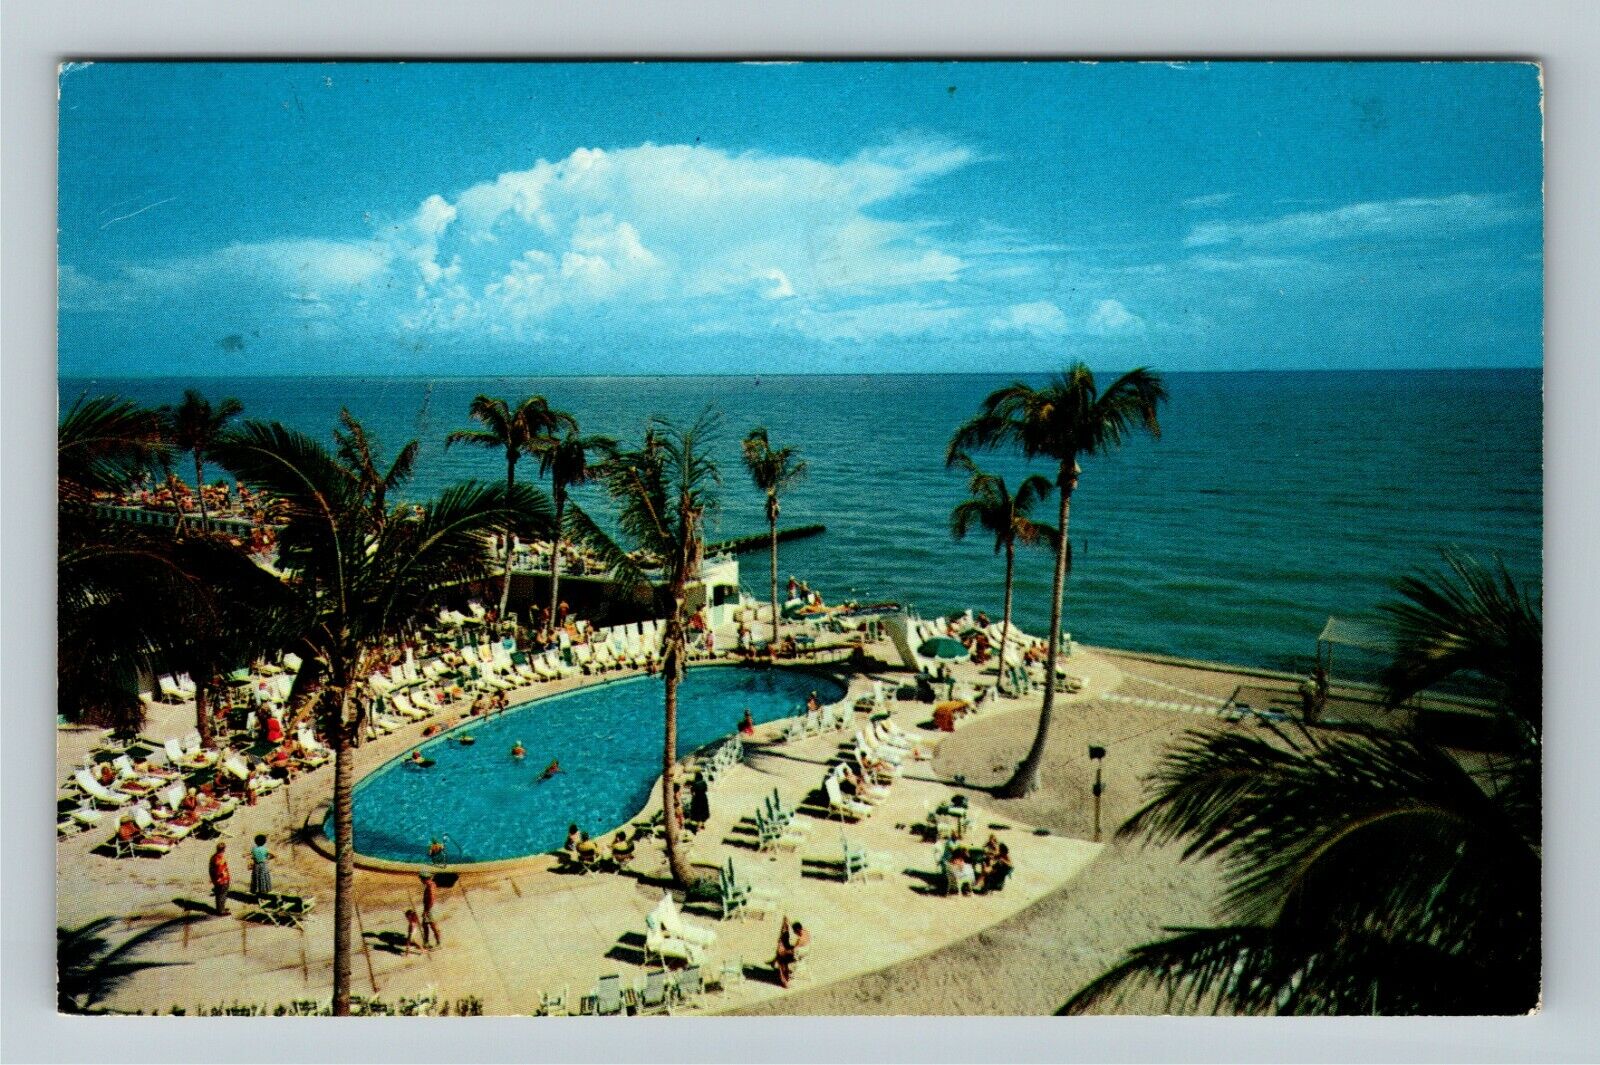 FL-Florida, Tropical Southern Coast, Poolside, c1985Postcard